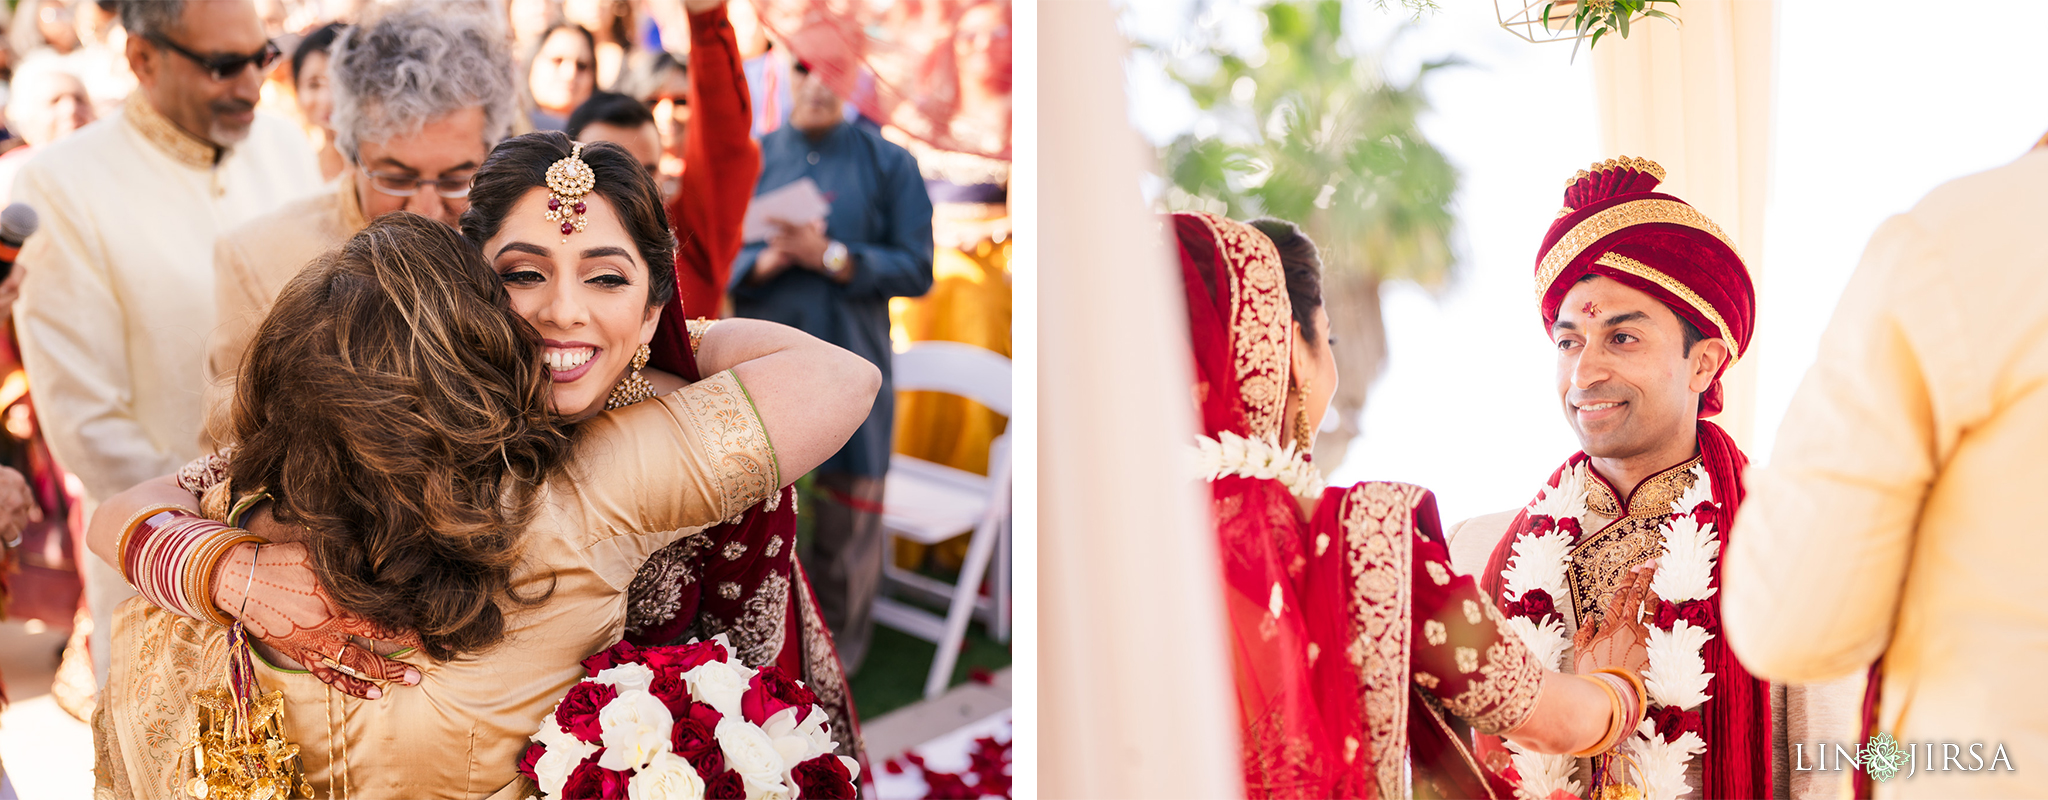 14 Newport Beach Marriott Indian Wedding Photography